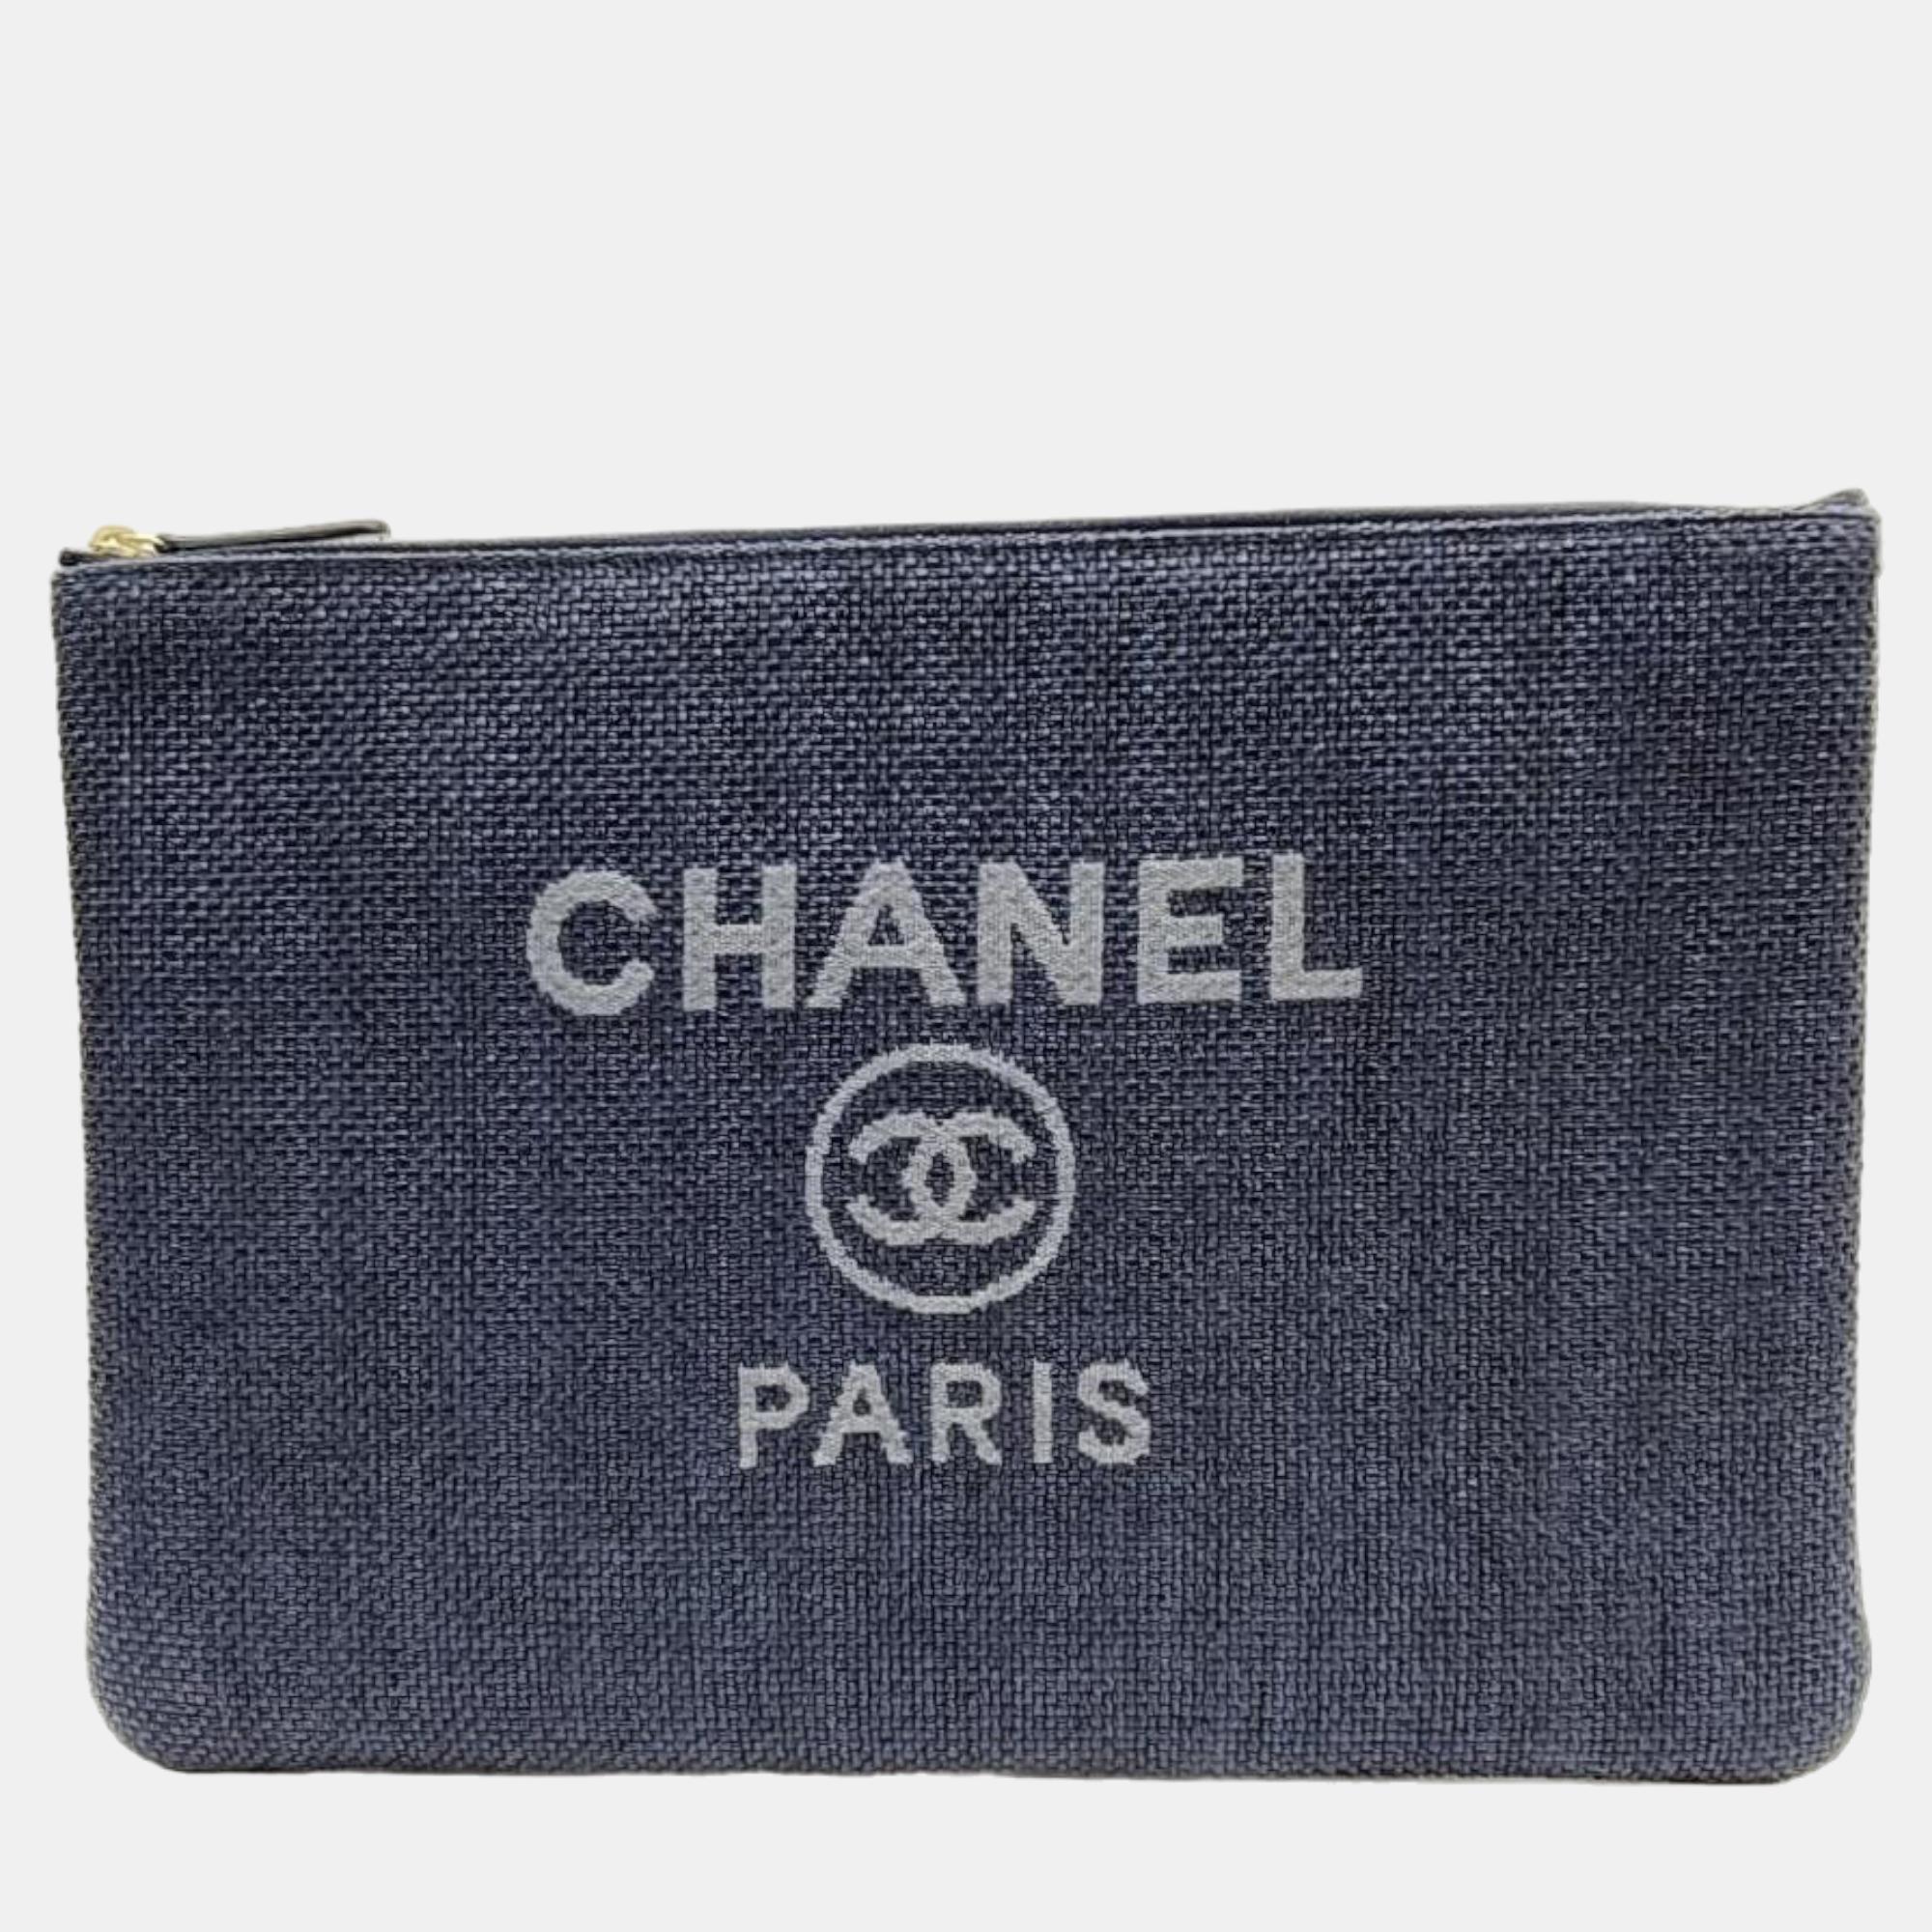 Chanel Blue Denim Large Clutch